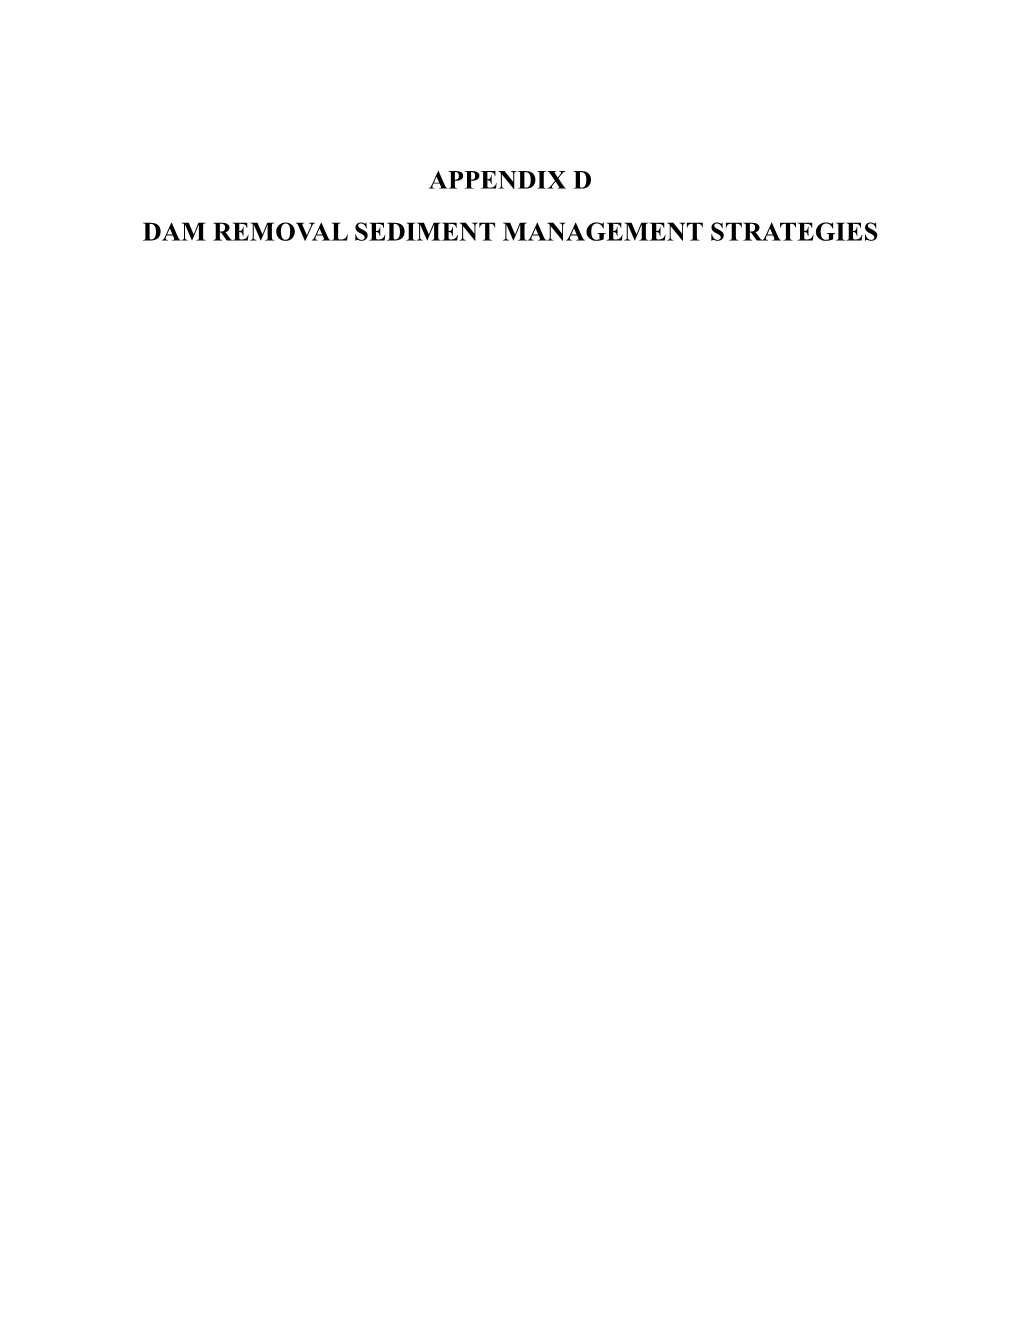 Appendix D Dam Removal Sediment Management Strategies